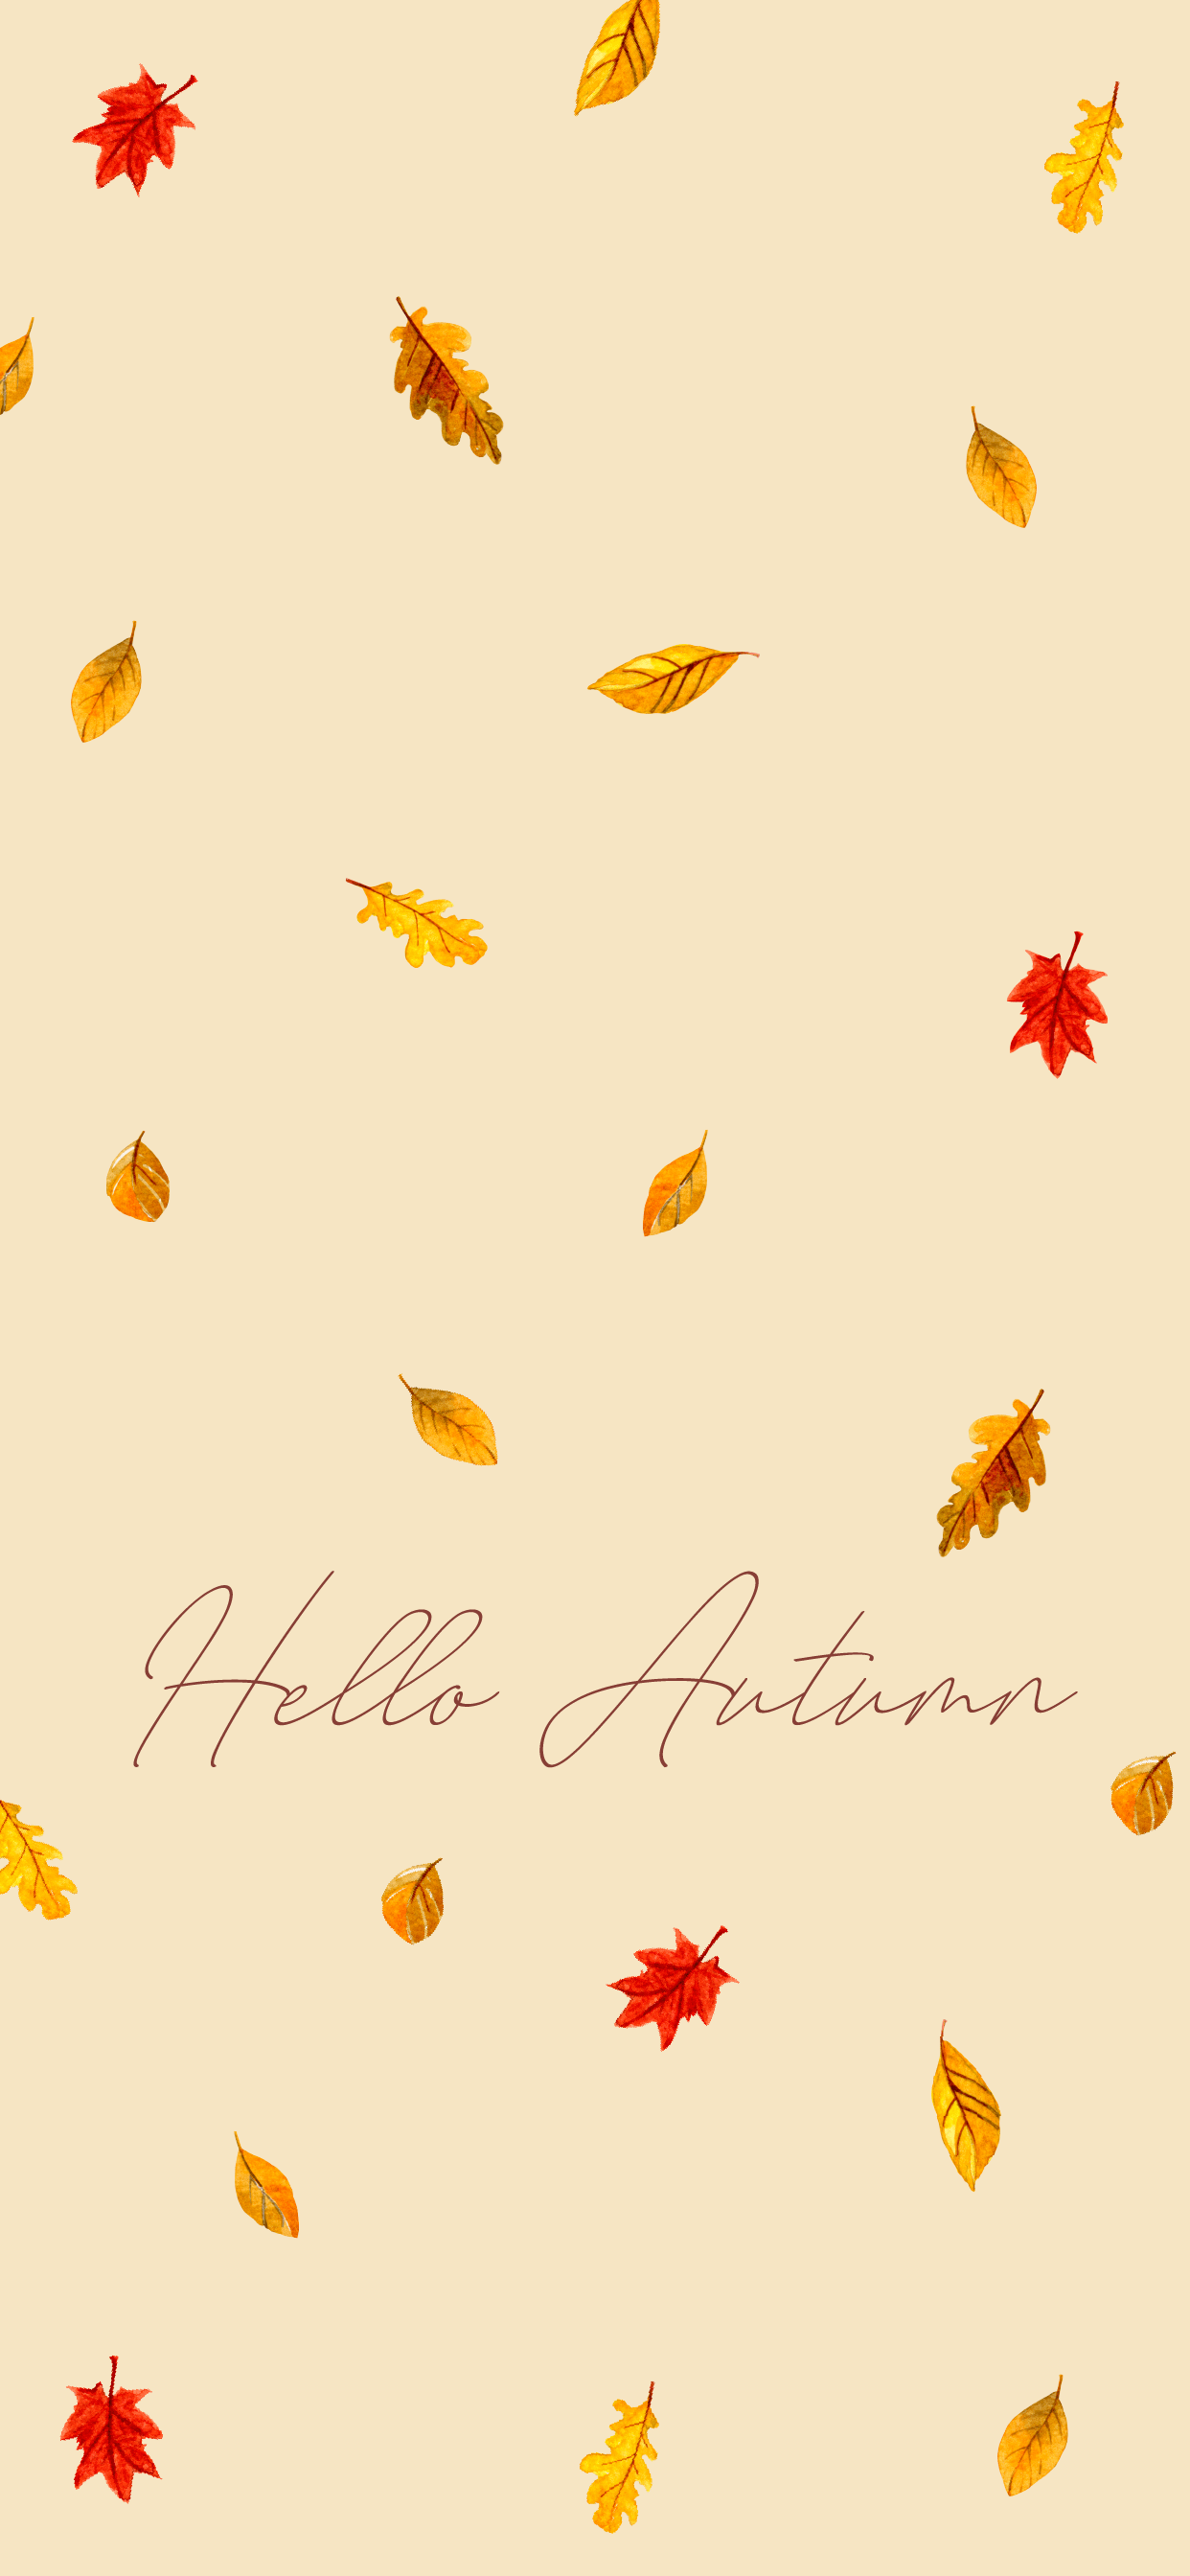 Free Autumn iPhone Wallpaper. Thanksgiving iphone wallpaper, iPhone wallpaper fall, Autumn phone wallpaper